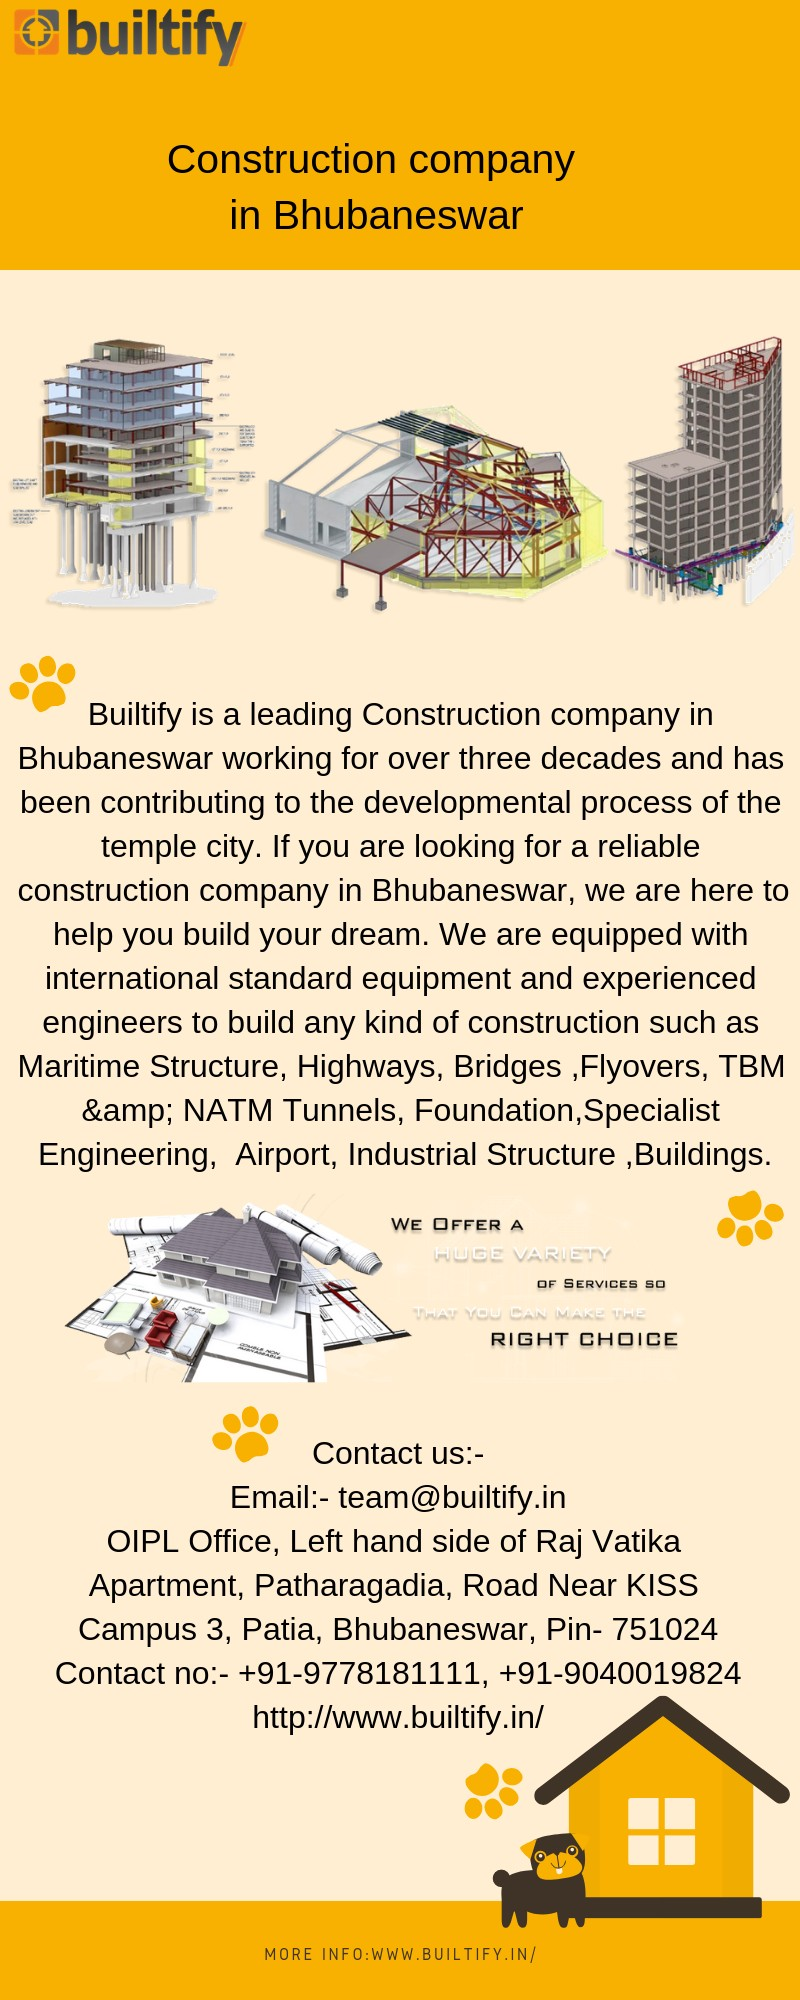 Construction company in Bhubaneswar